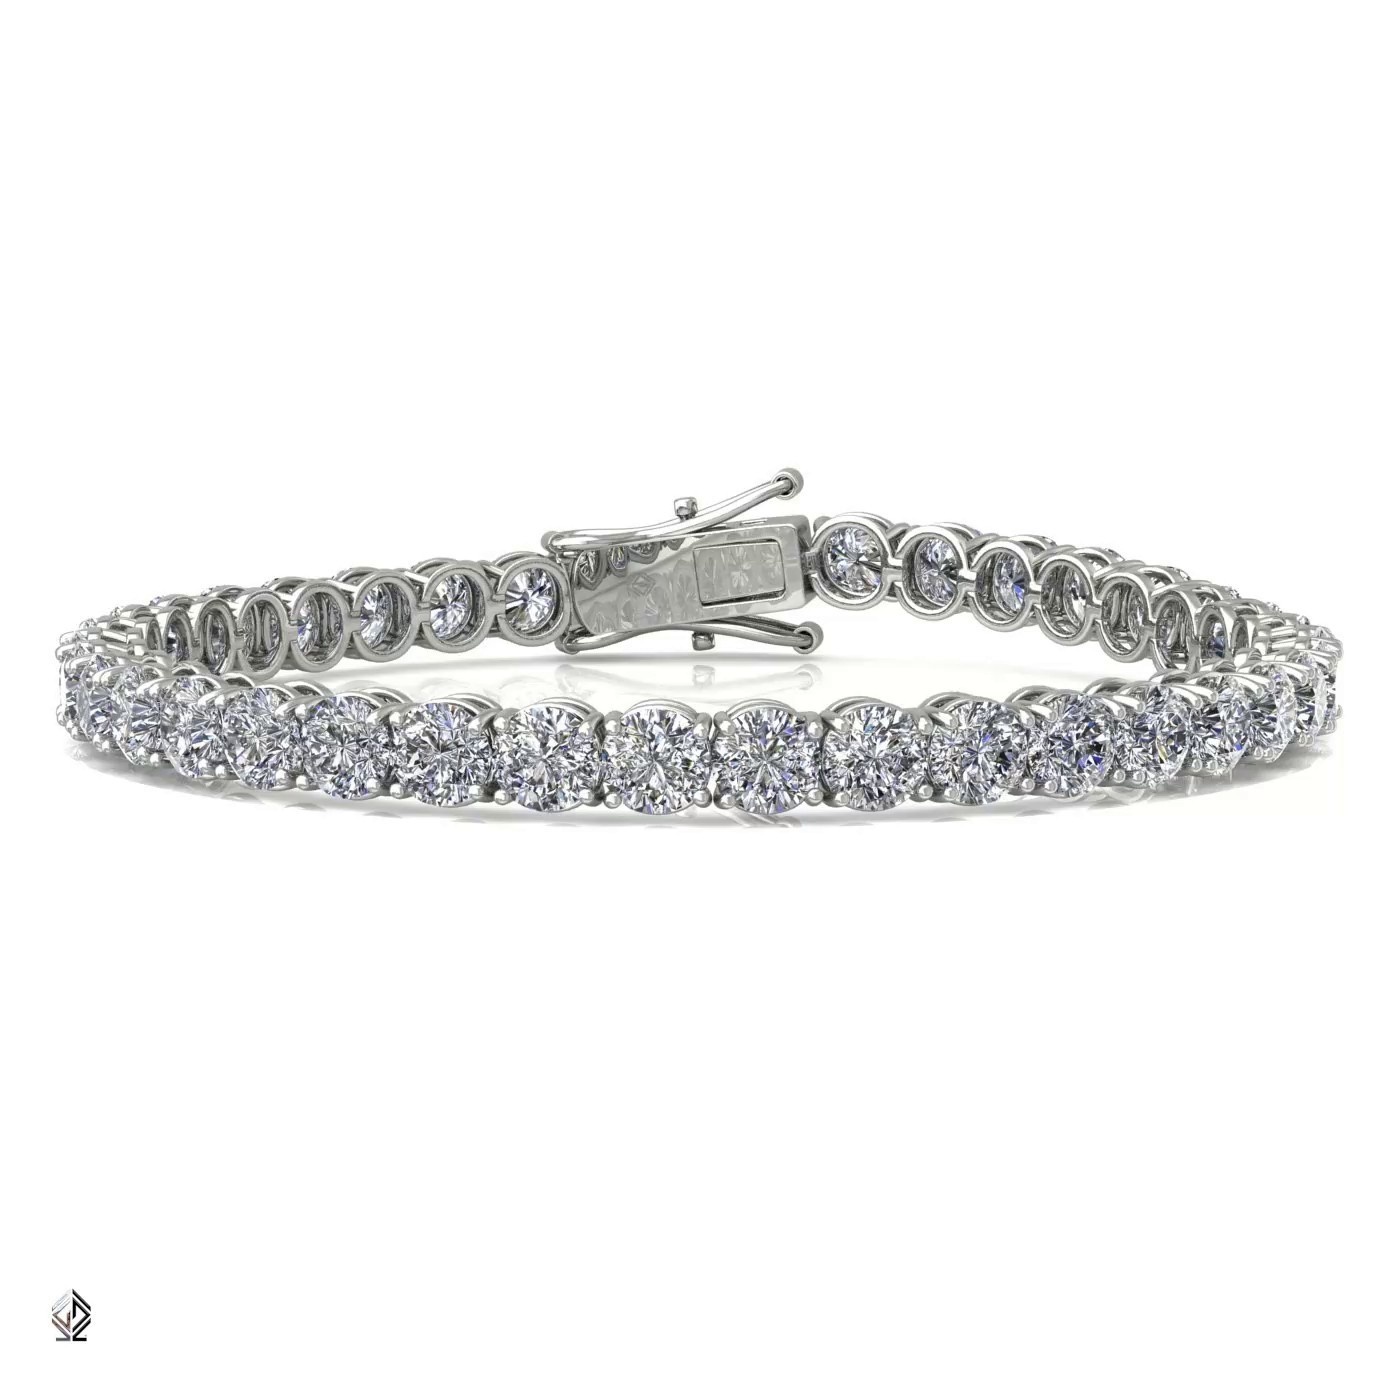 18k white gold 2.6mm 4 prong round shape diamond tennis bracelet in round setting Photos & images